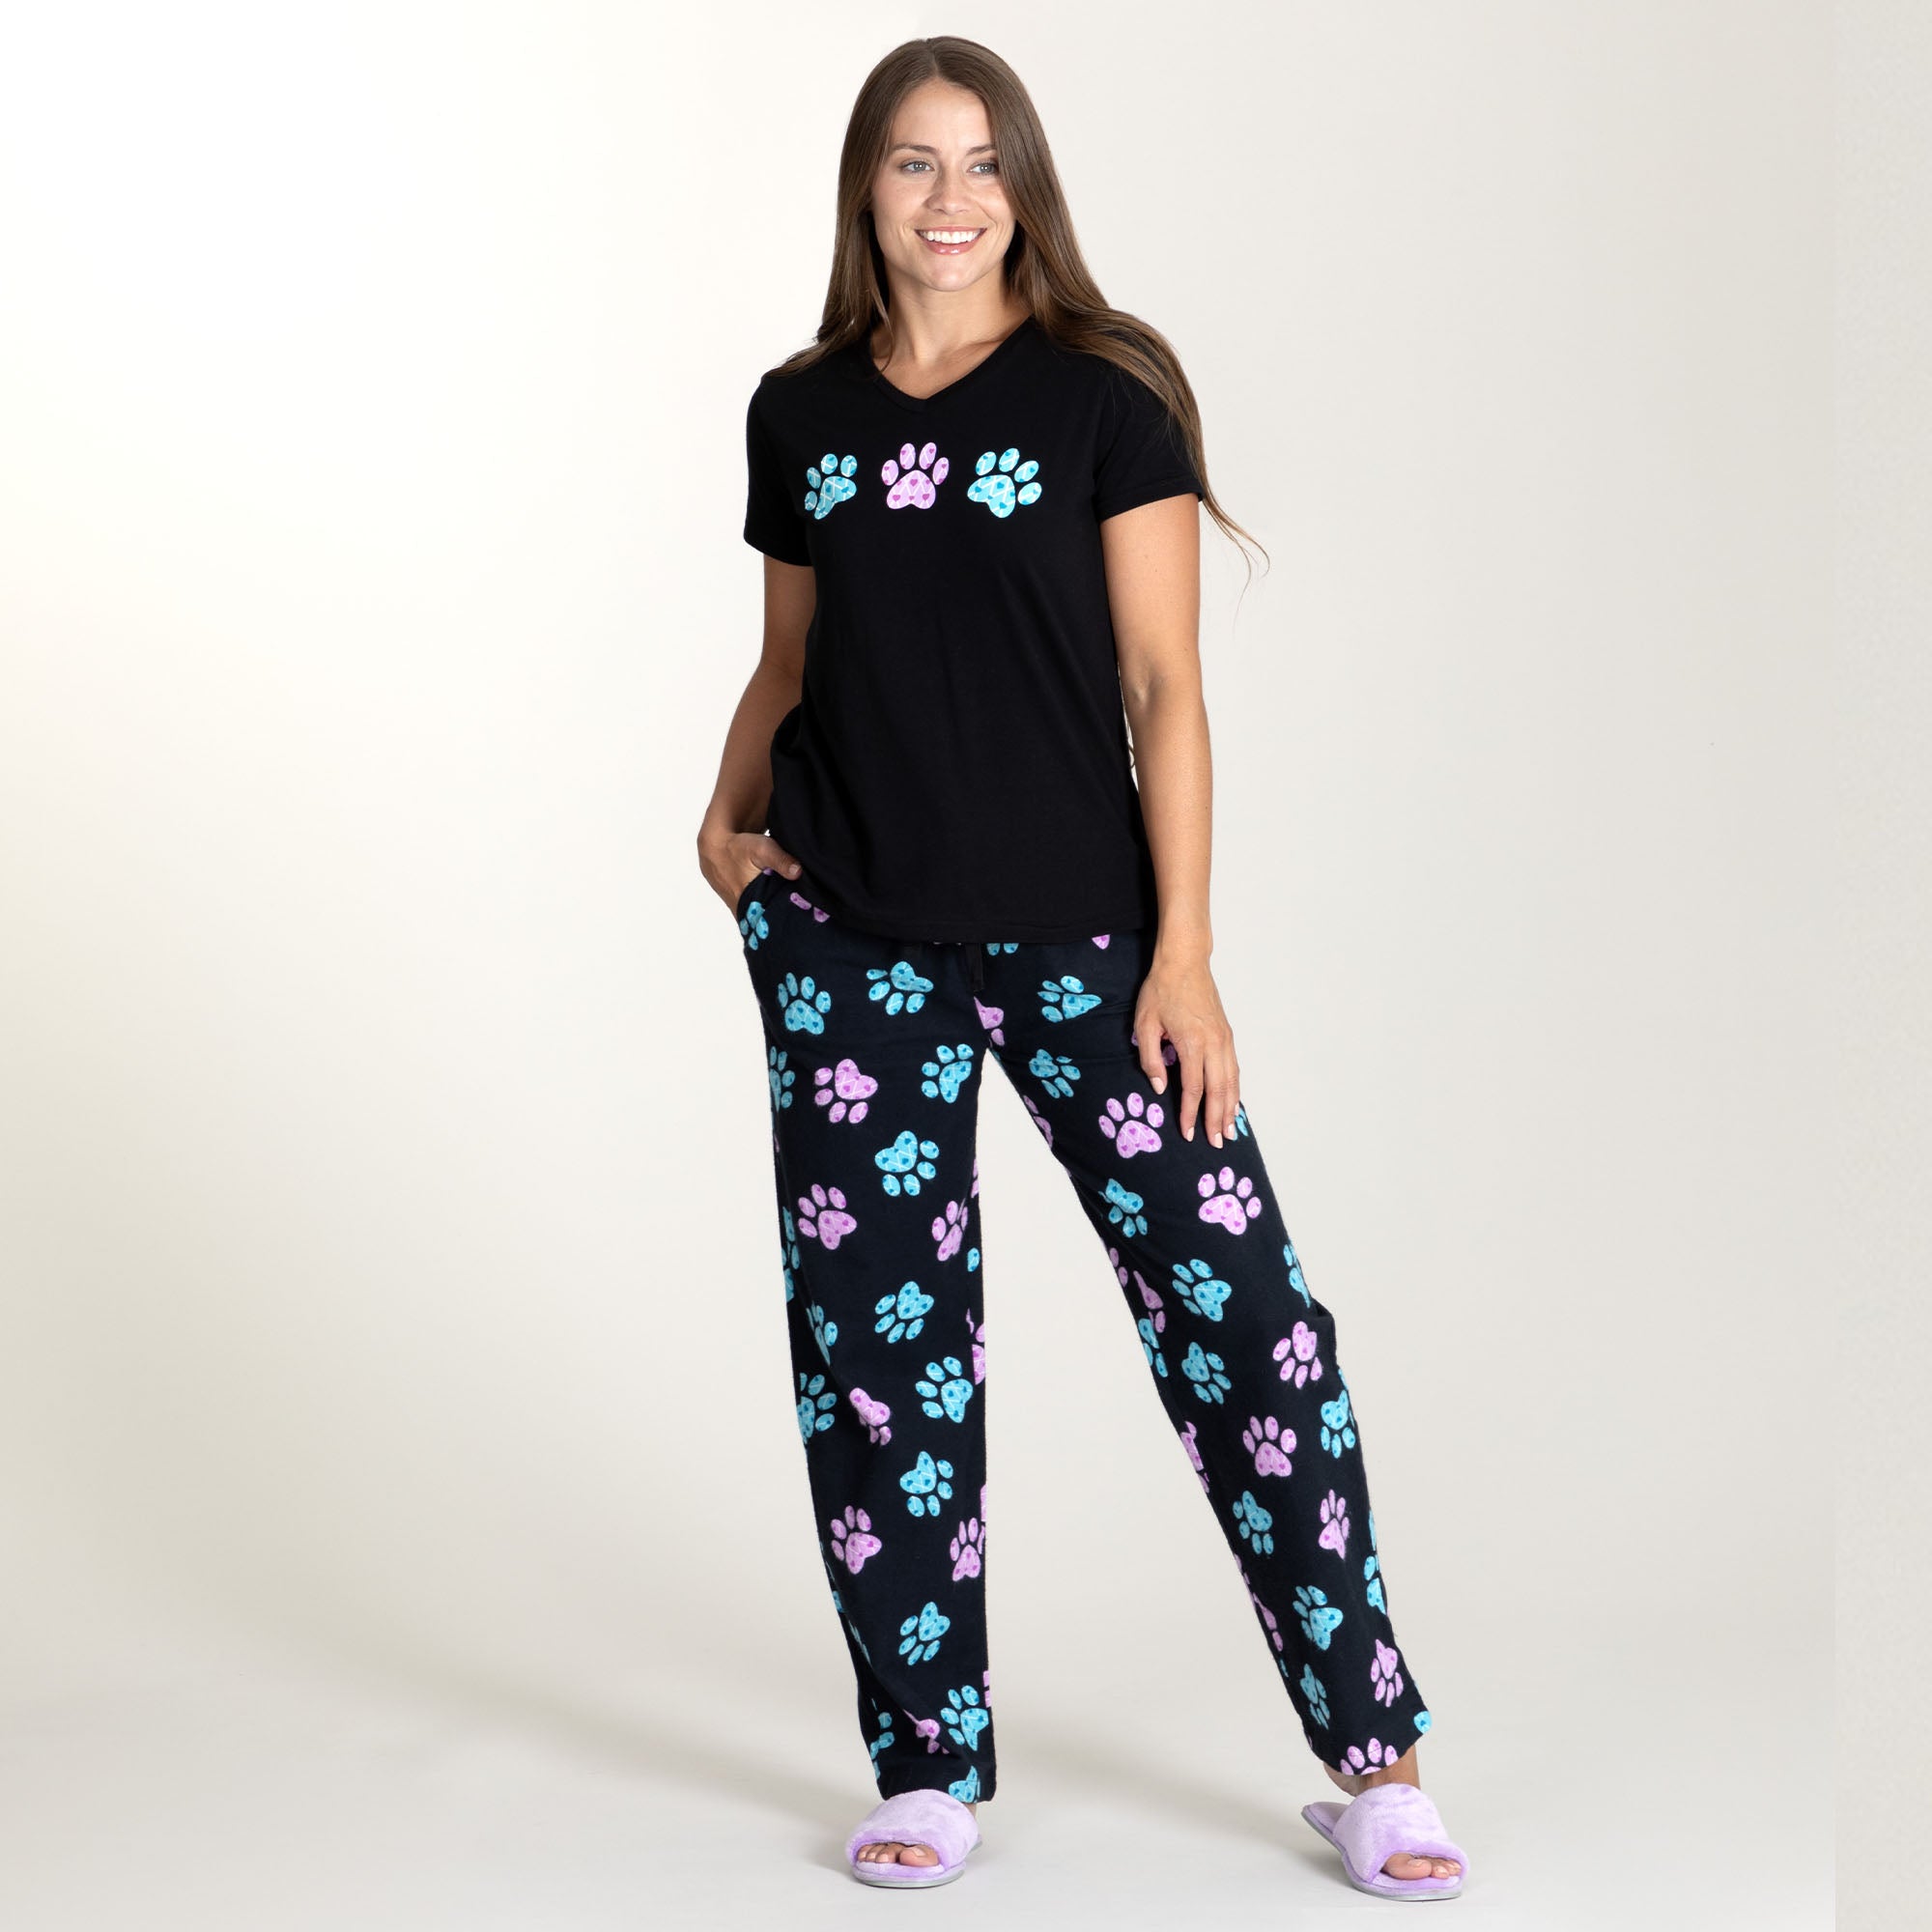 Argyle Paws Flannel Pajama Set - L